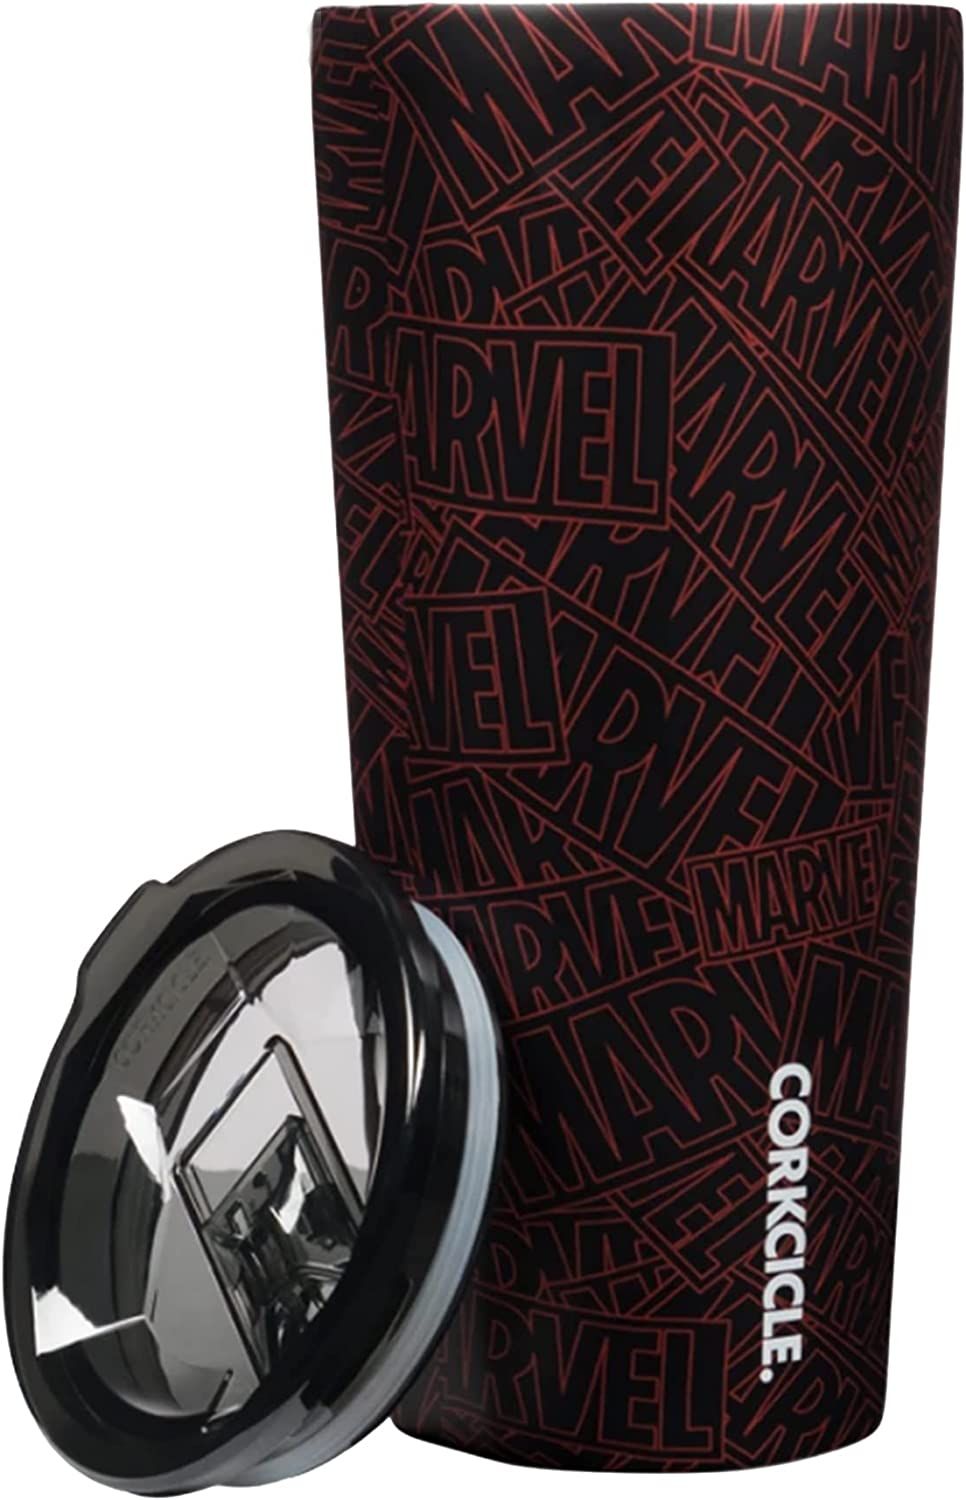 Marvel Corkcicle Tumbler Travel Mug lid